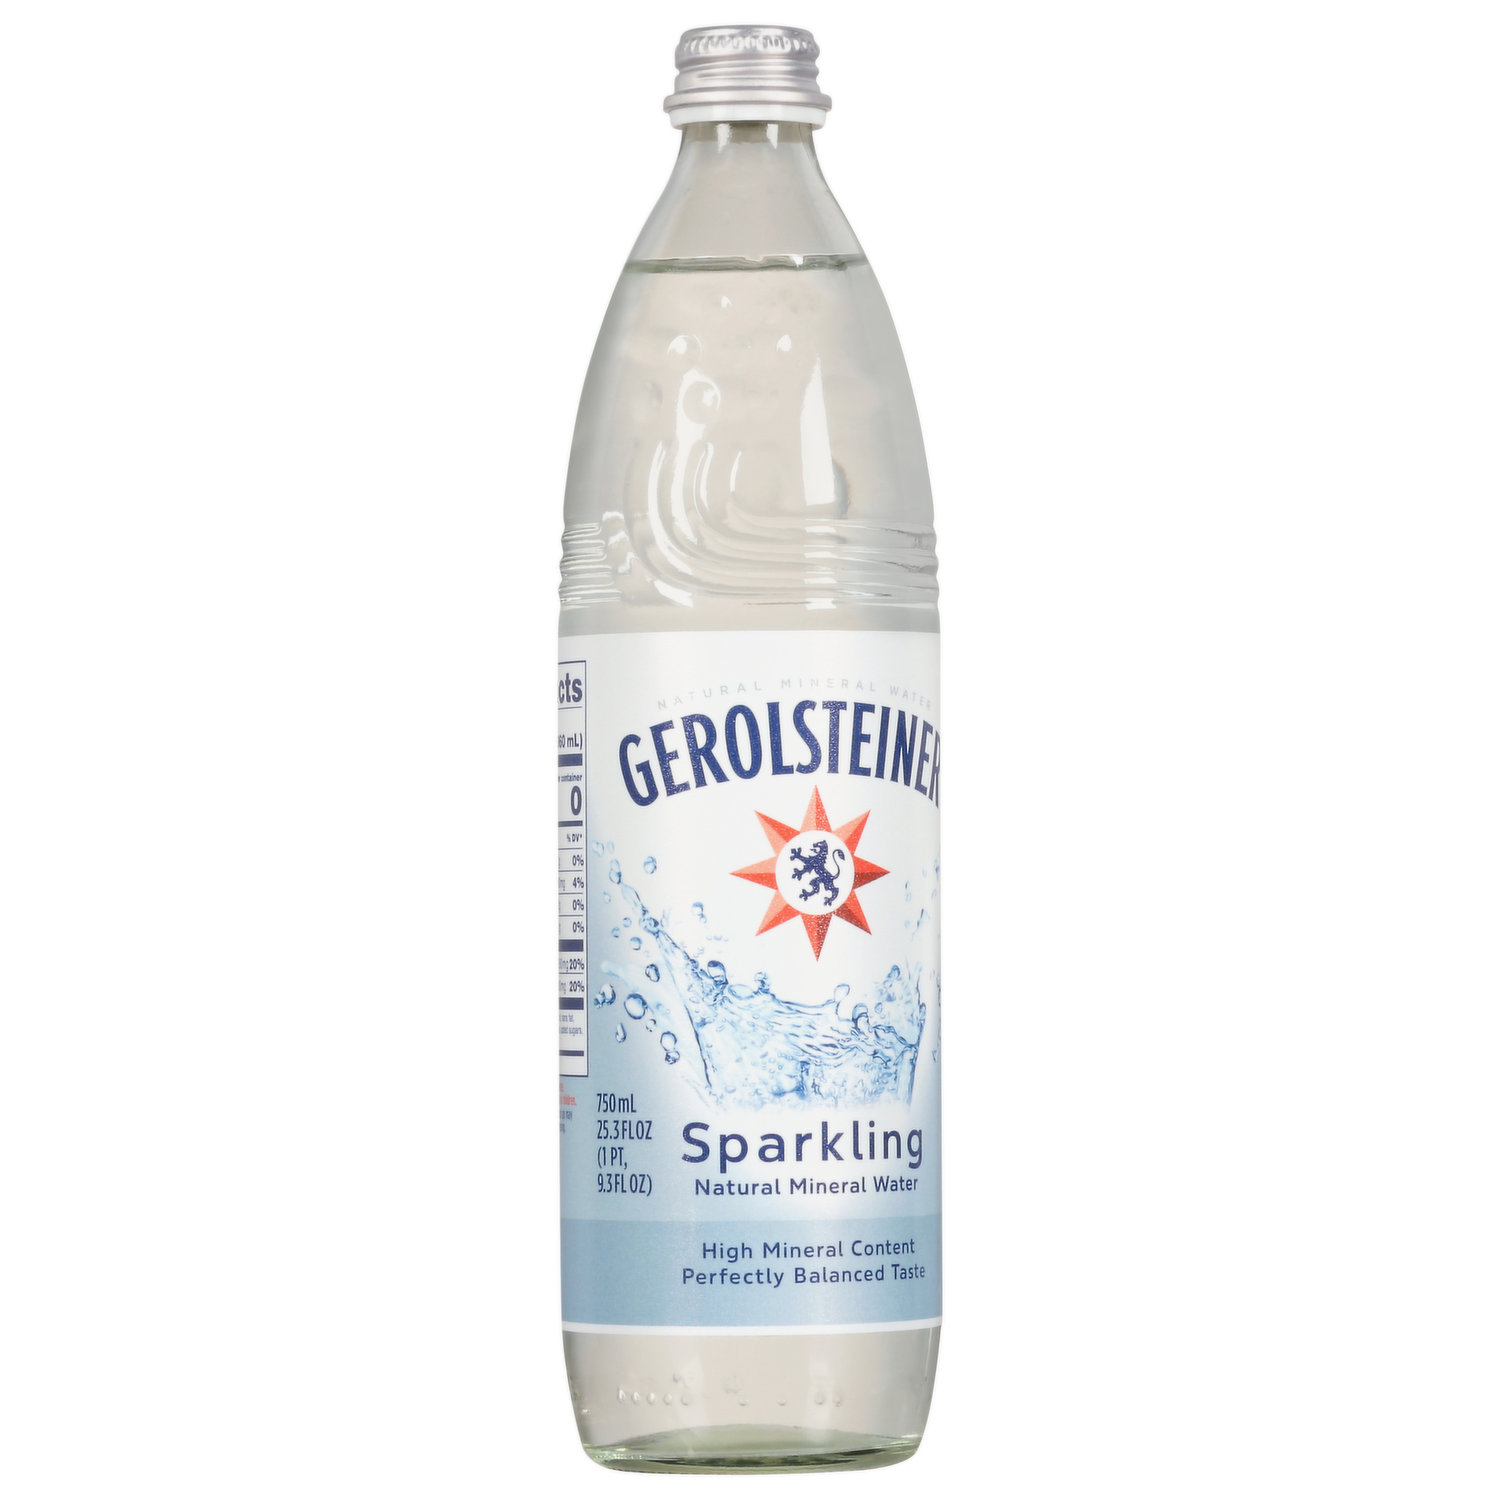 Natural Spring Water Glass Bottle, 25.3 fl oz at Whole Foods Market